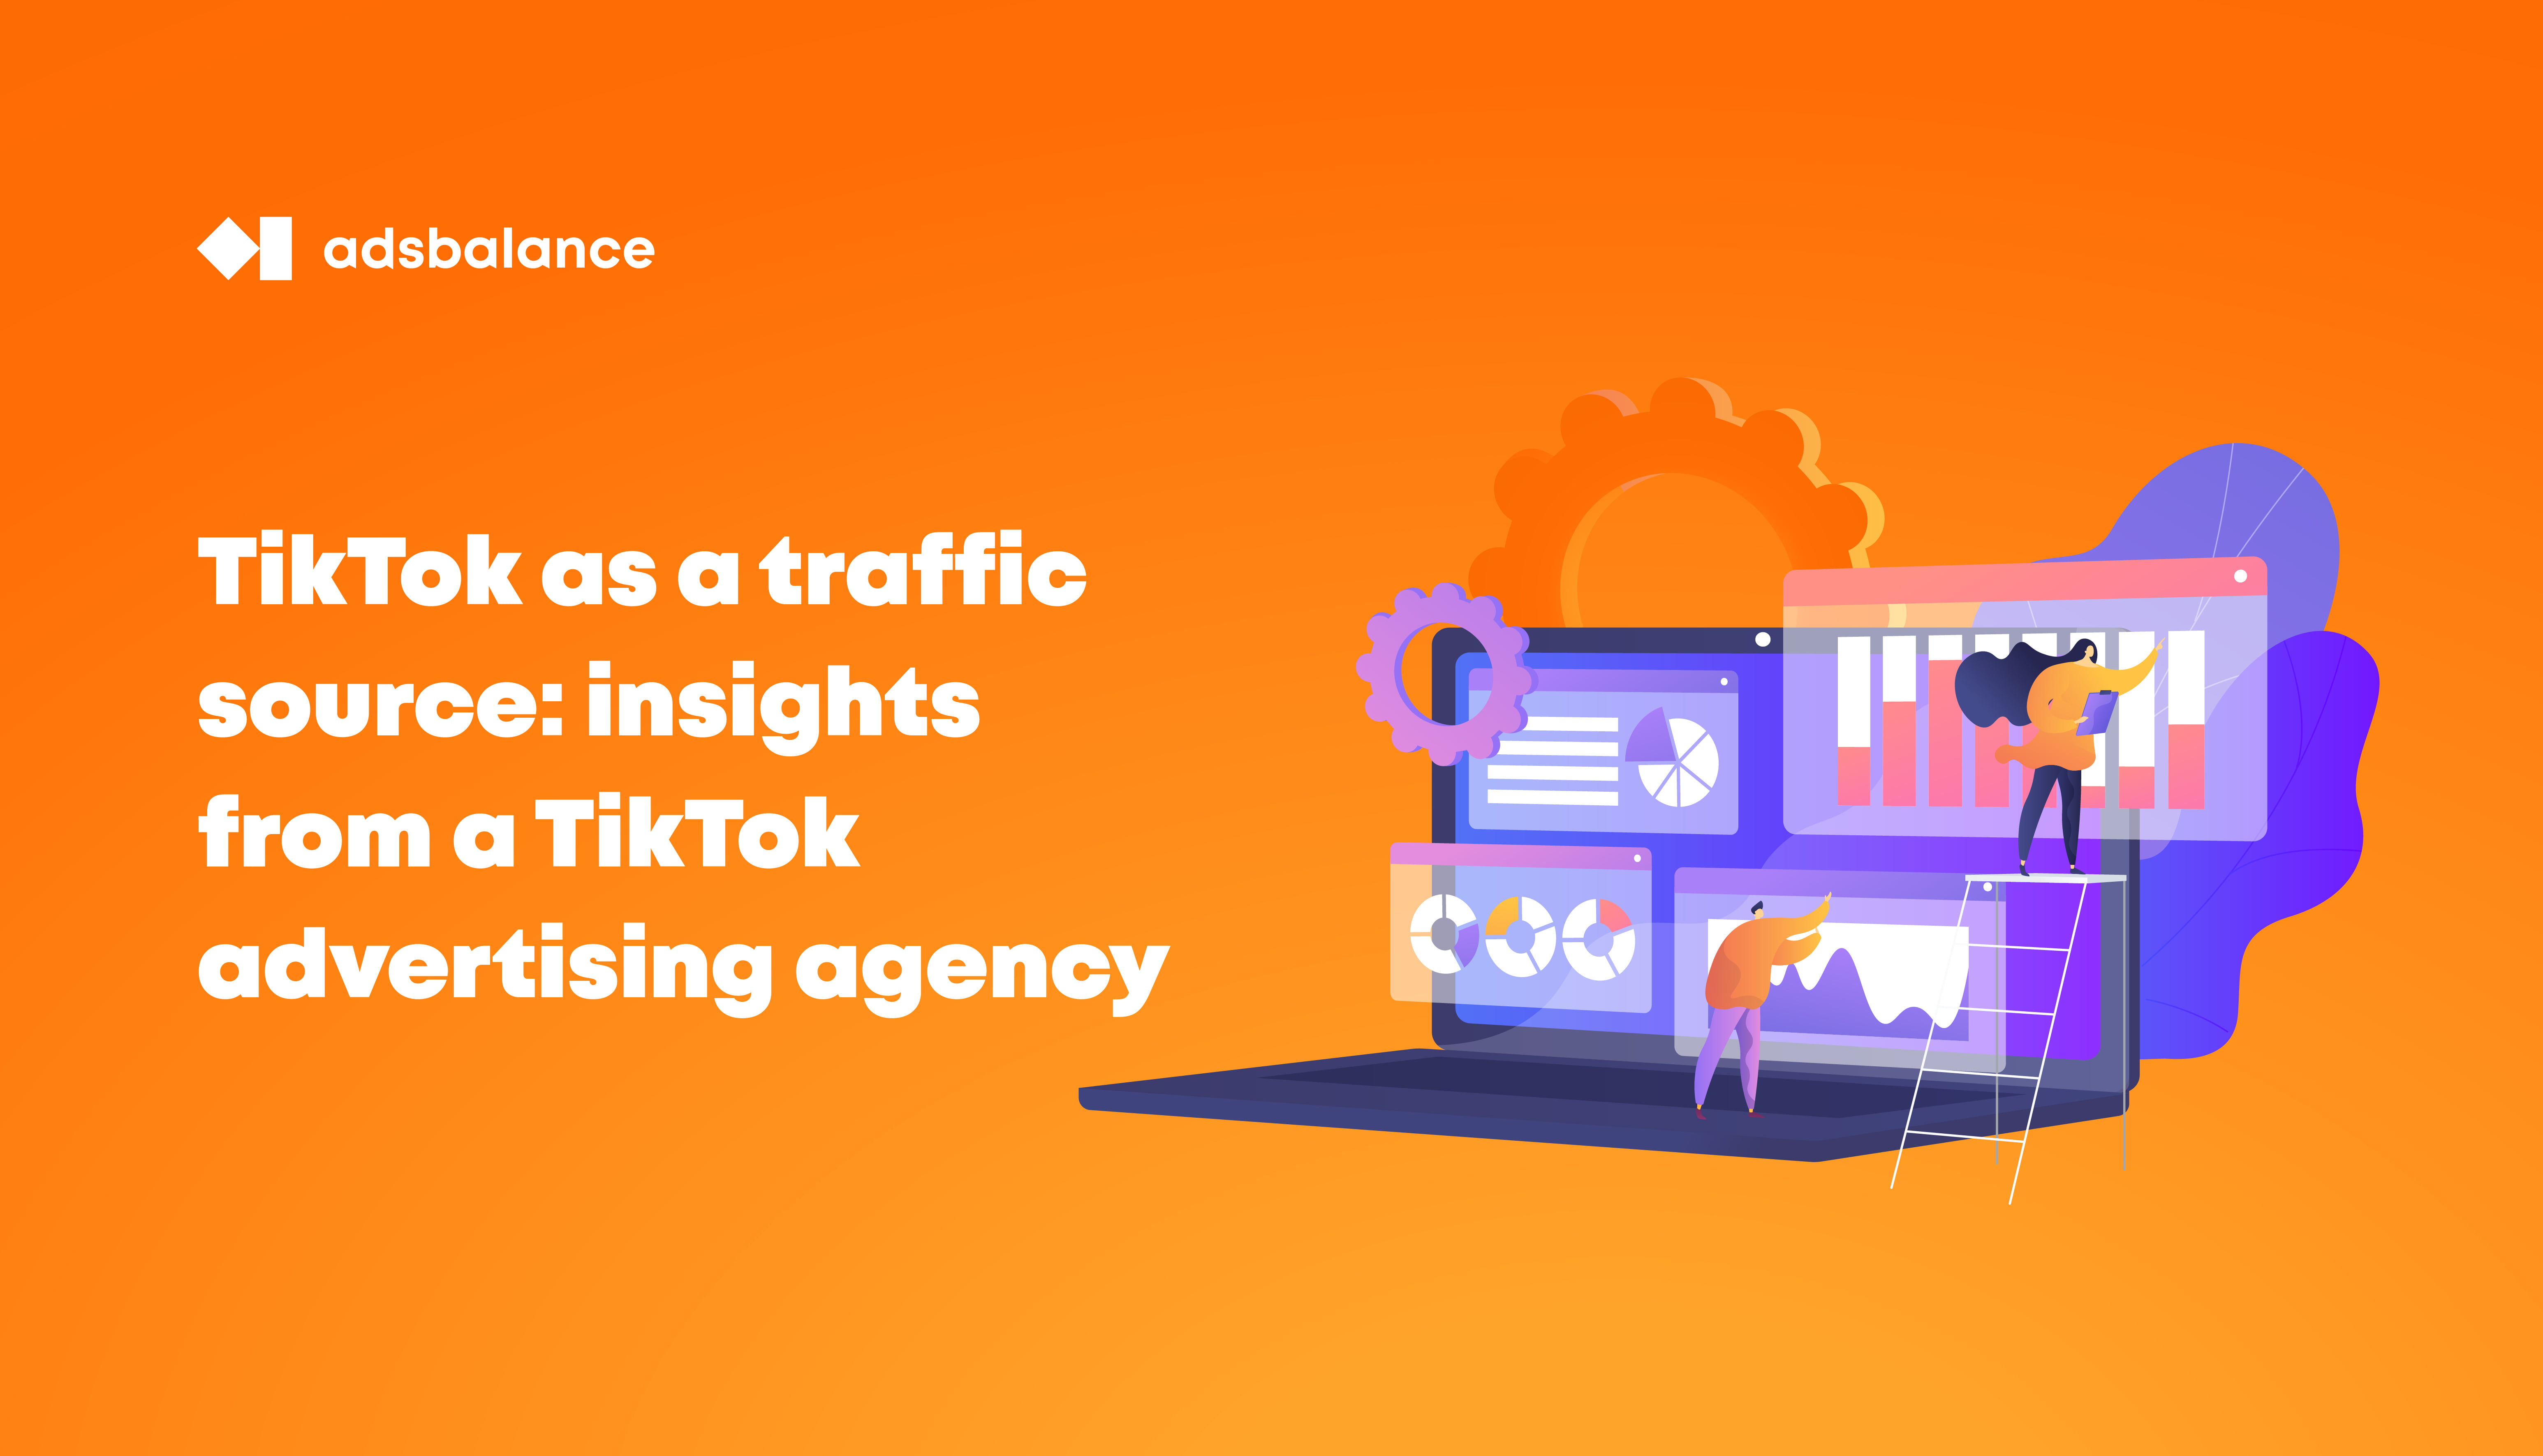 TikTok as a traffic source: insights from a TikTok advertising agency